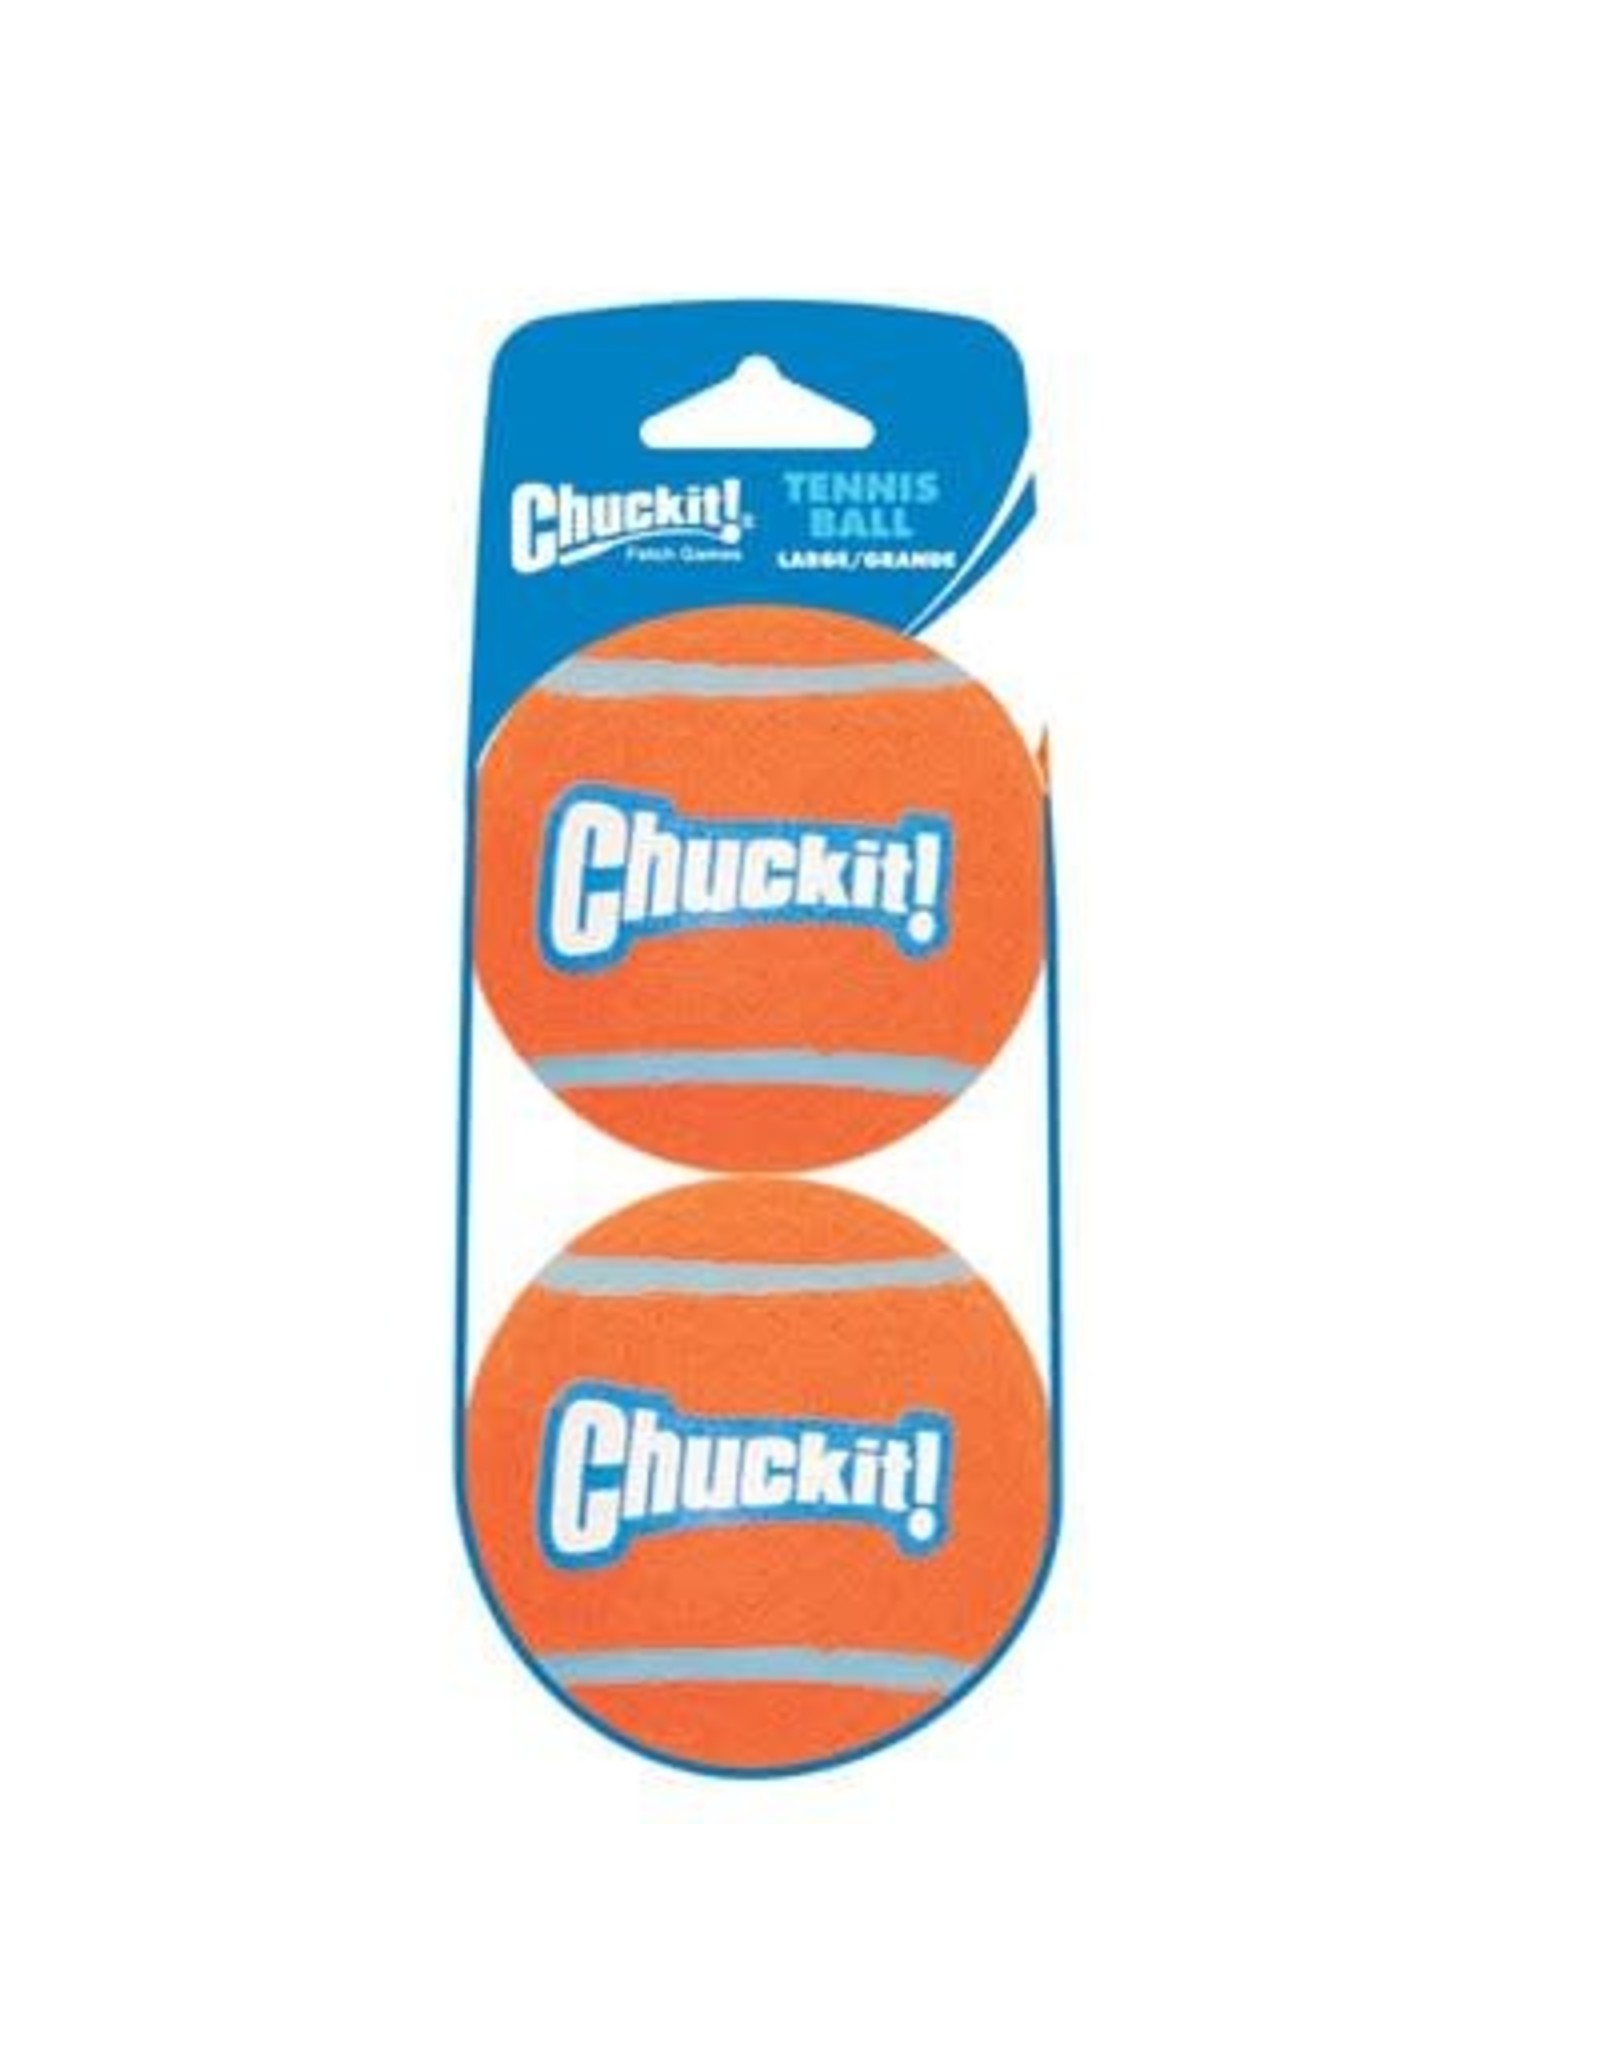 Chuck-It Chuck-It Tennis Ball Large 2pk